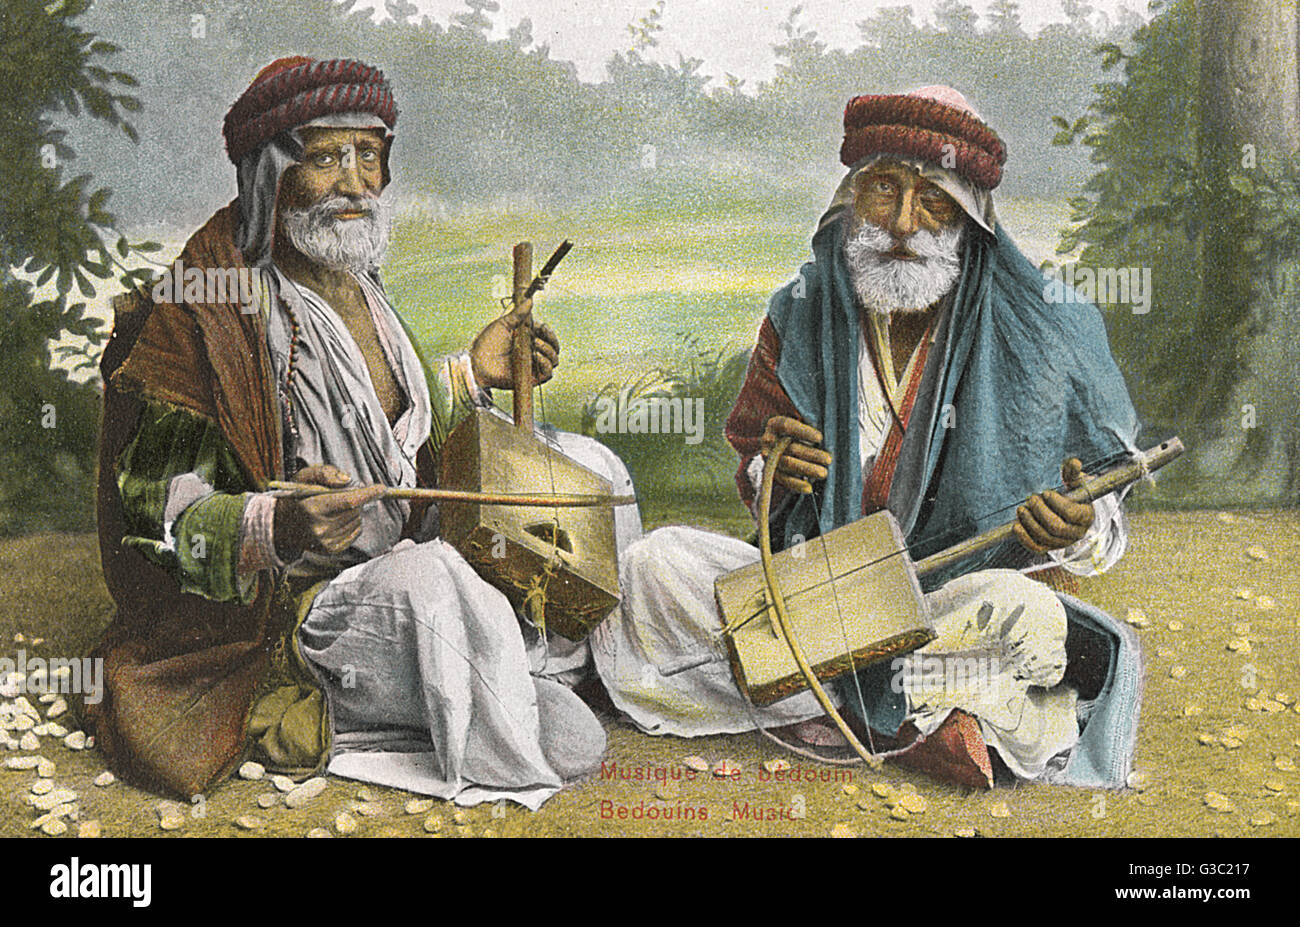 Lebanon - Two Bedouin Musicians playing masenqo Stock Photo